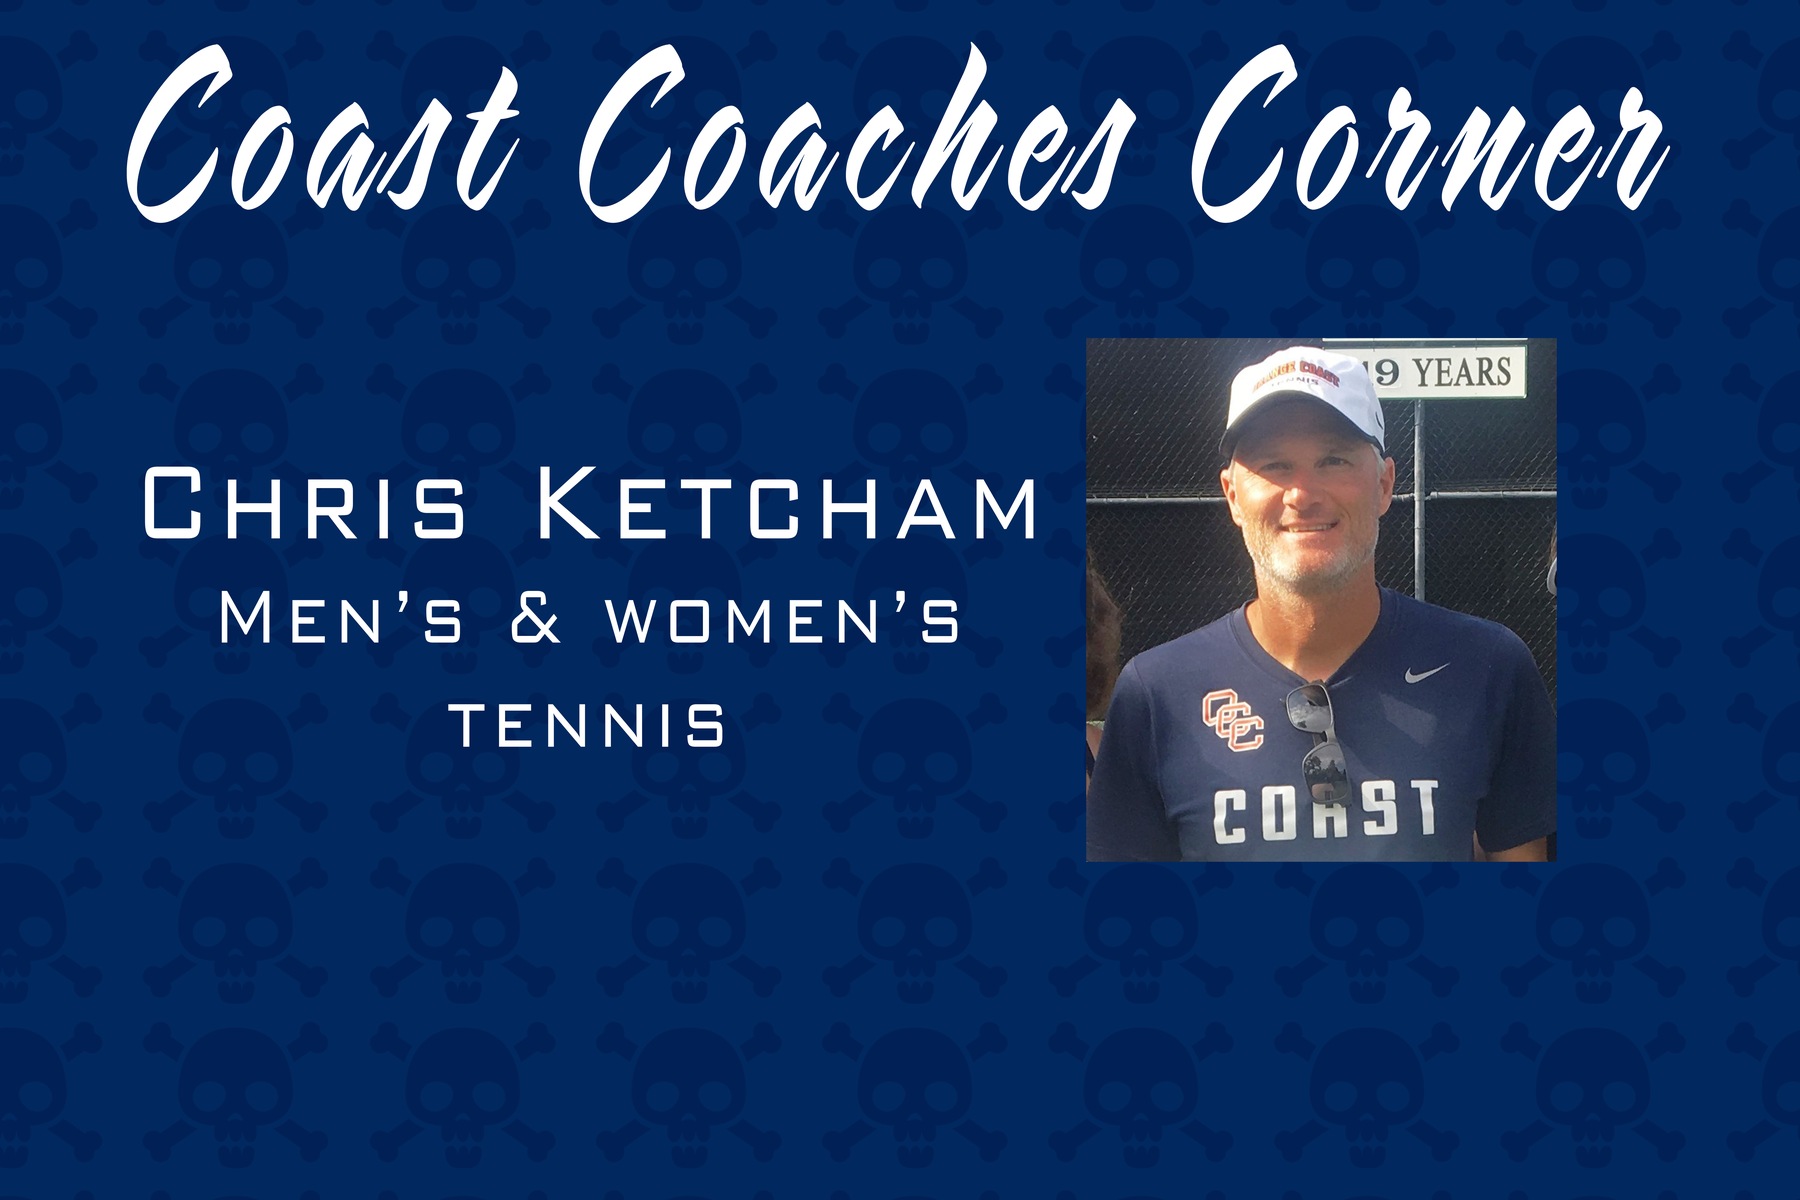 Coast Coaches Corner -- Chris Ketcham